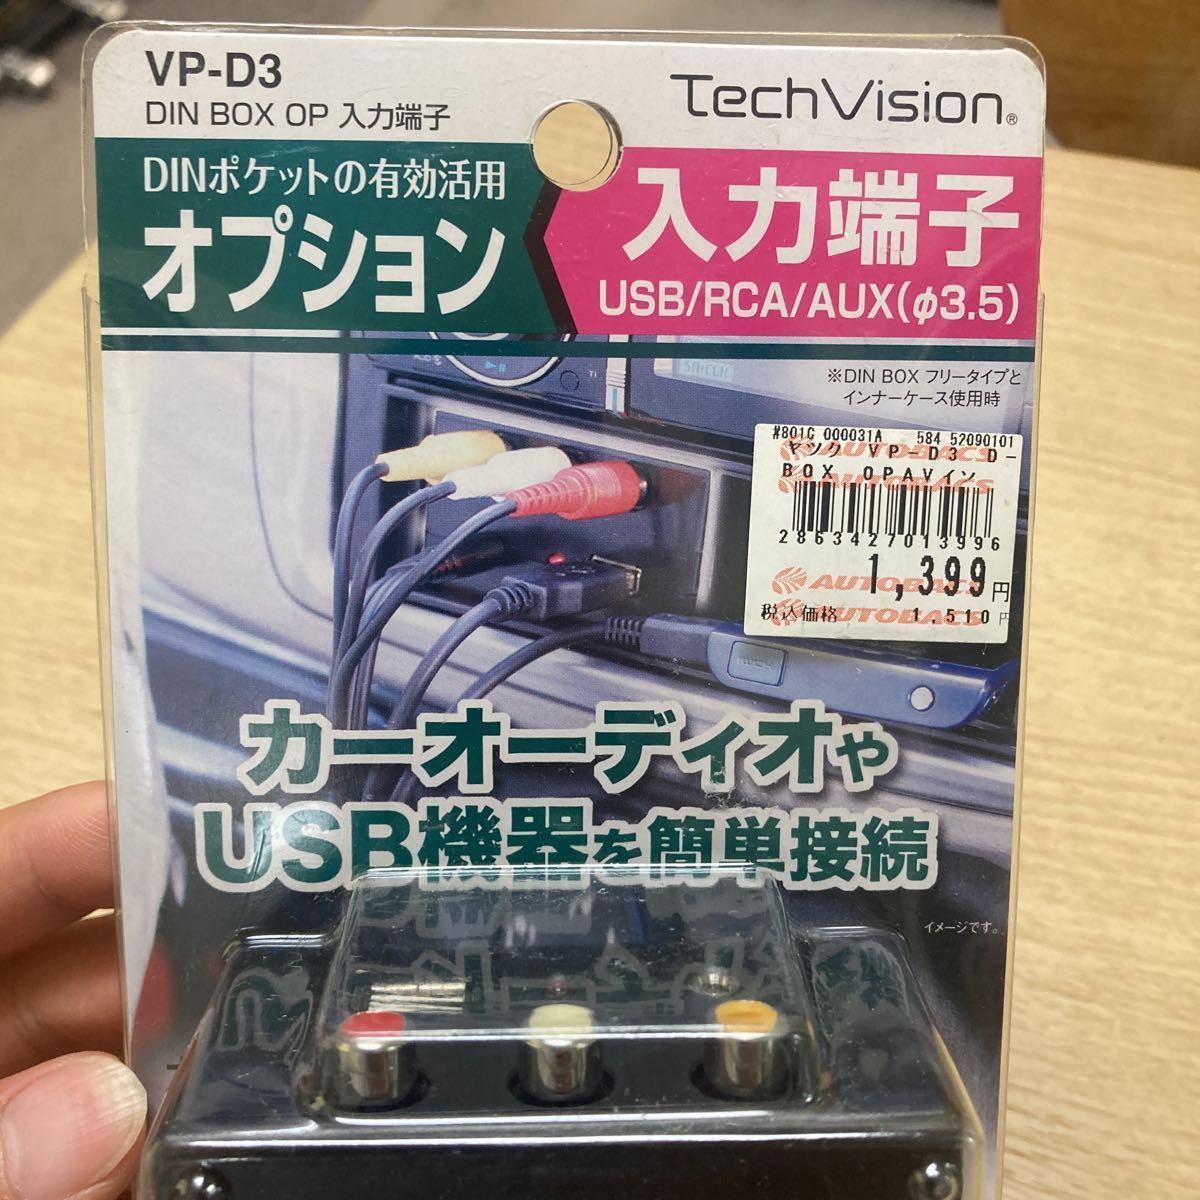 TechVision VP-D3 1DIN карман опция ввод терминал USB RCA AUX